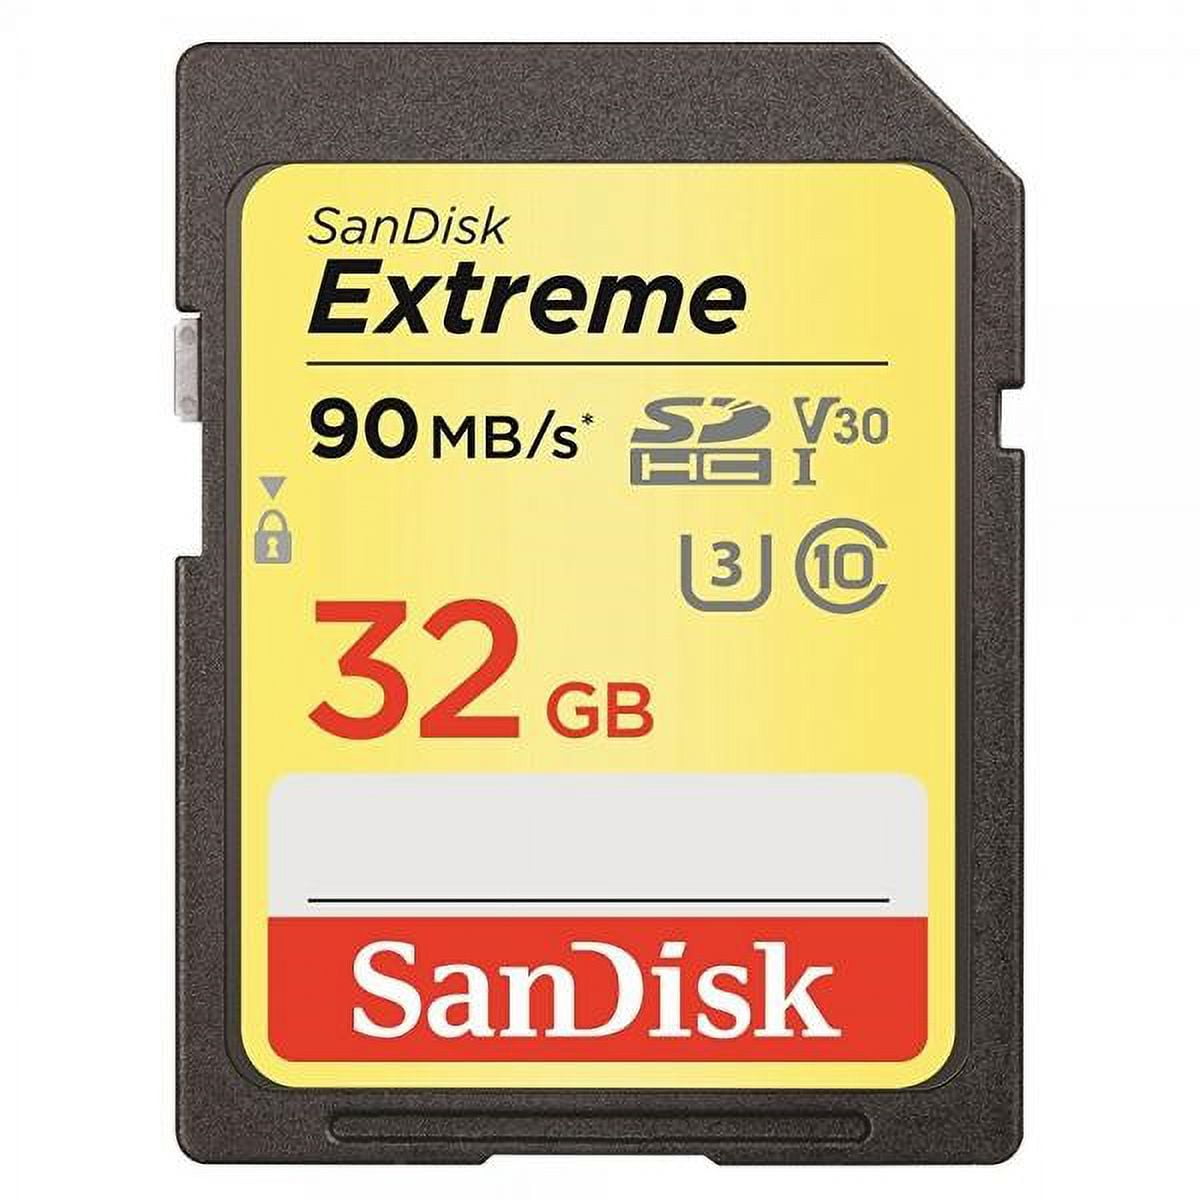 SanDisk 32GB Extreme PRO SDHC UHS-I Memory Card